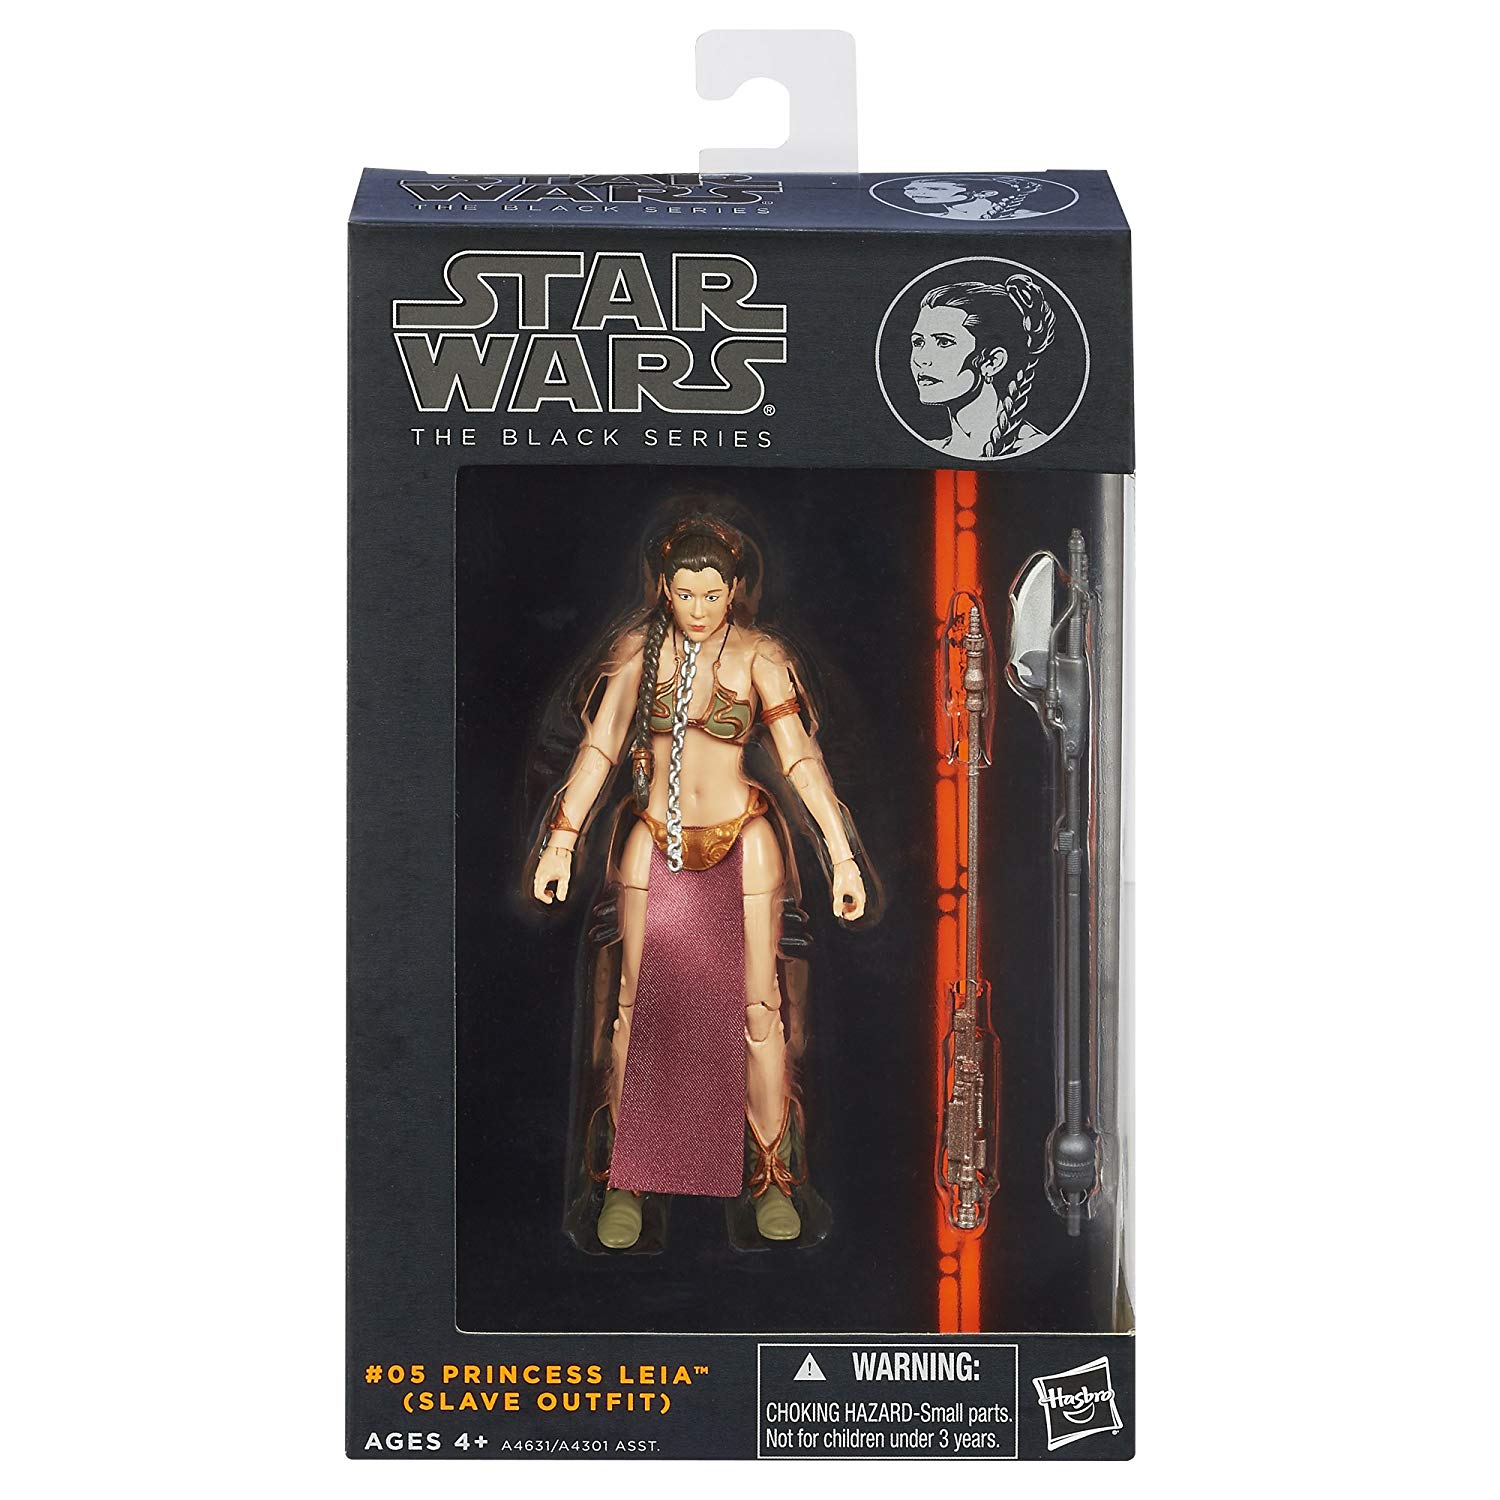 Star Wars Black Series Slave Leia (Orange Line) Action Figure 1